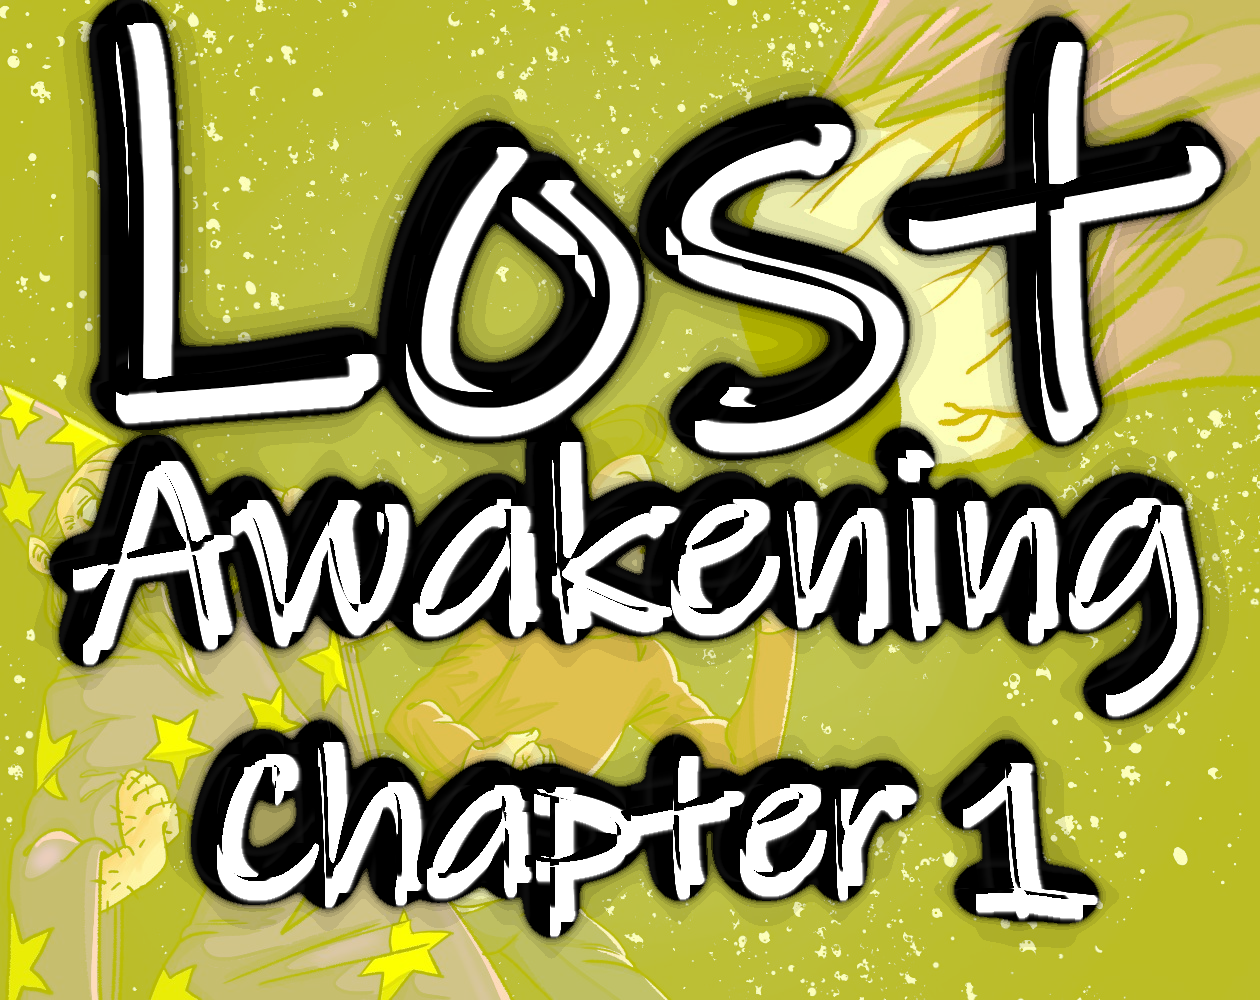 Lost Awakening, Chapter 1 Presskit Image